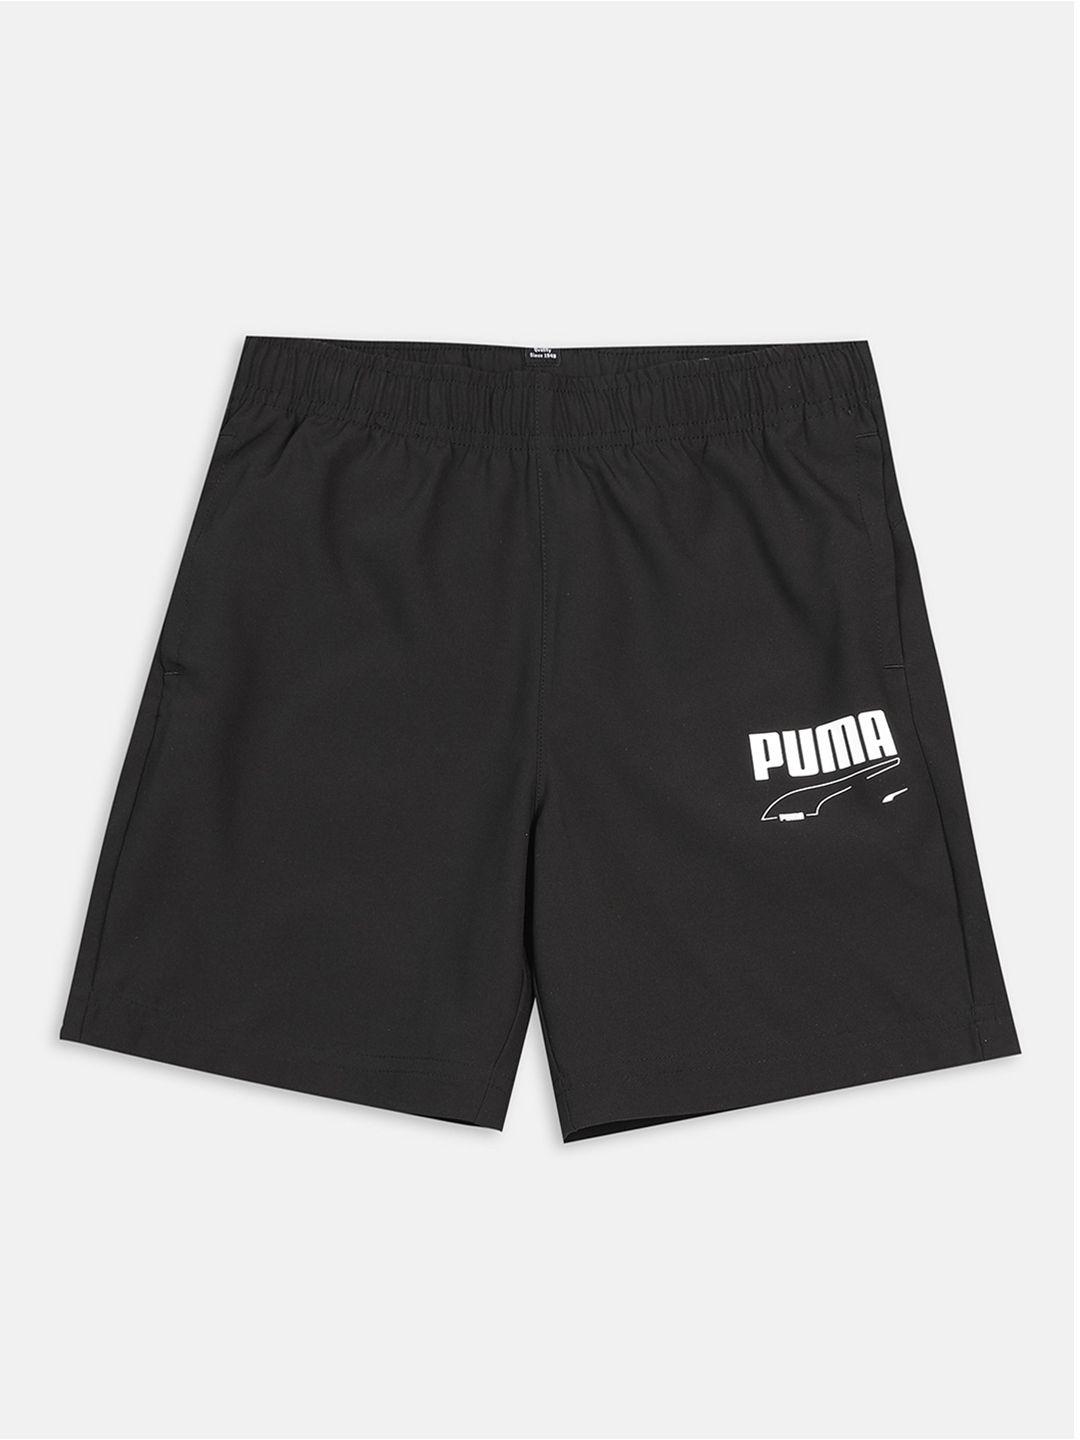 Puma Boys Outdoor Rebel Woven Youth Sports Shorts